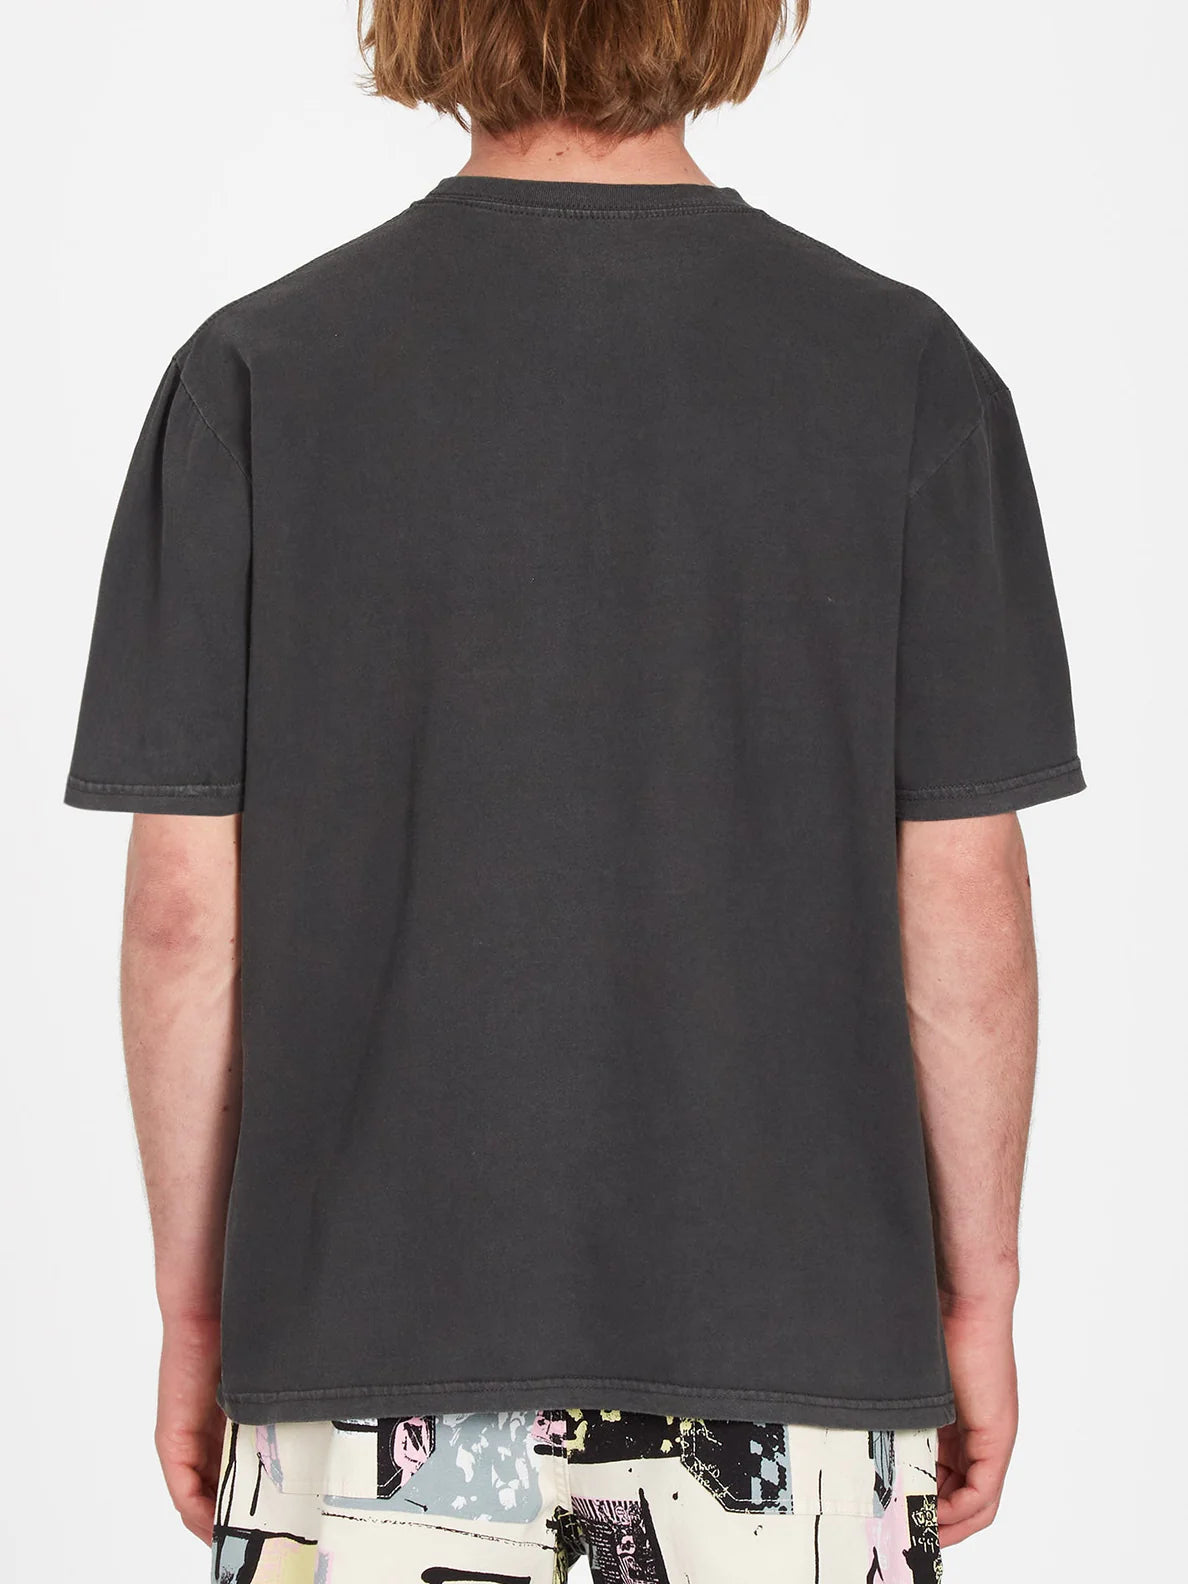 Camiseta Volcom Solid Stone Black | Camisetas de hombre | Camisetas manga corta de hombre | Volcom Shop | surfdevils.com